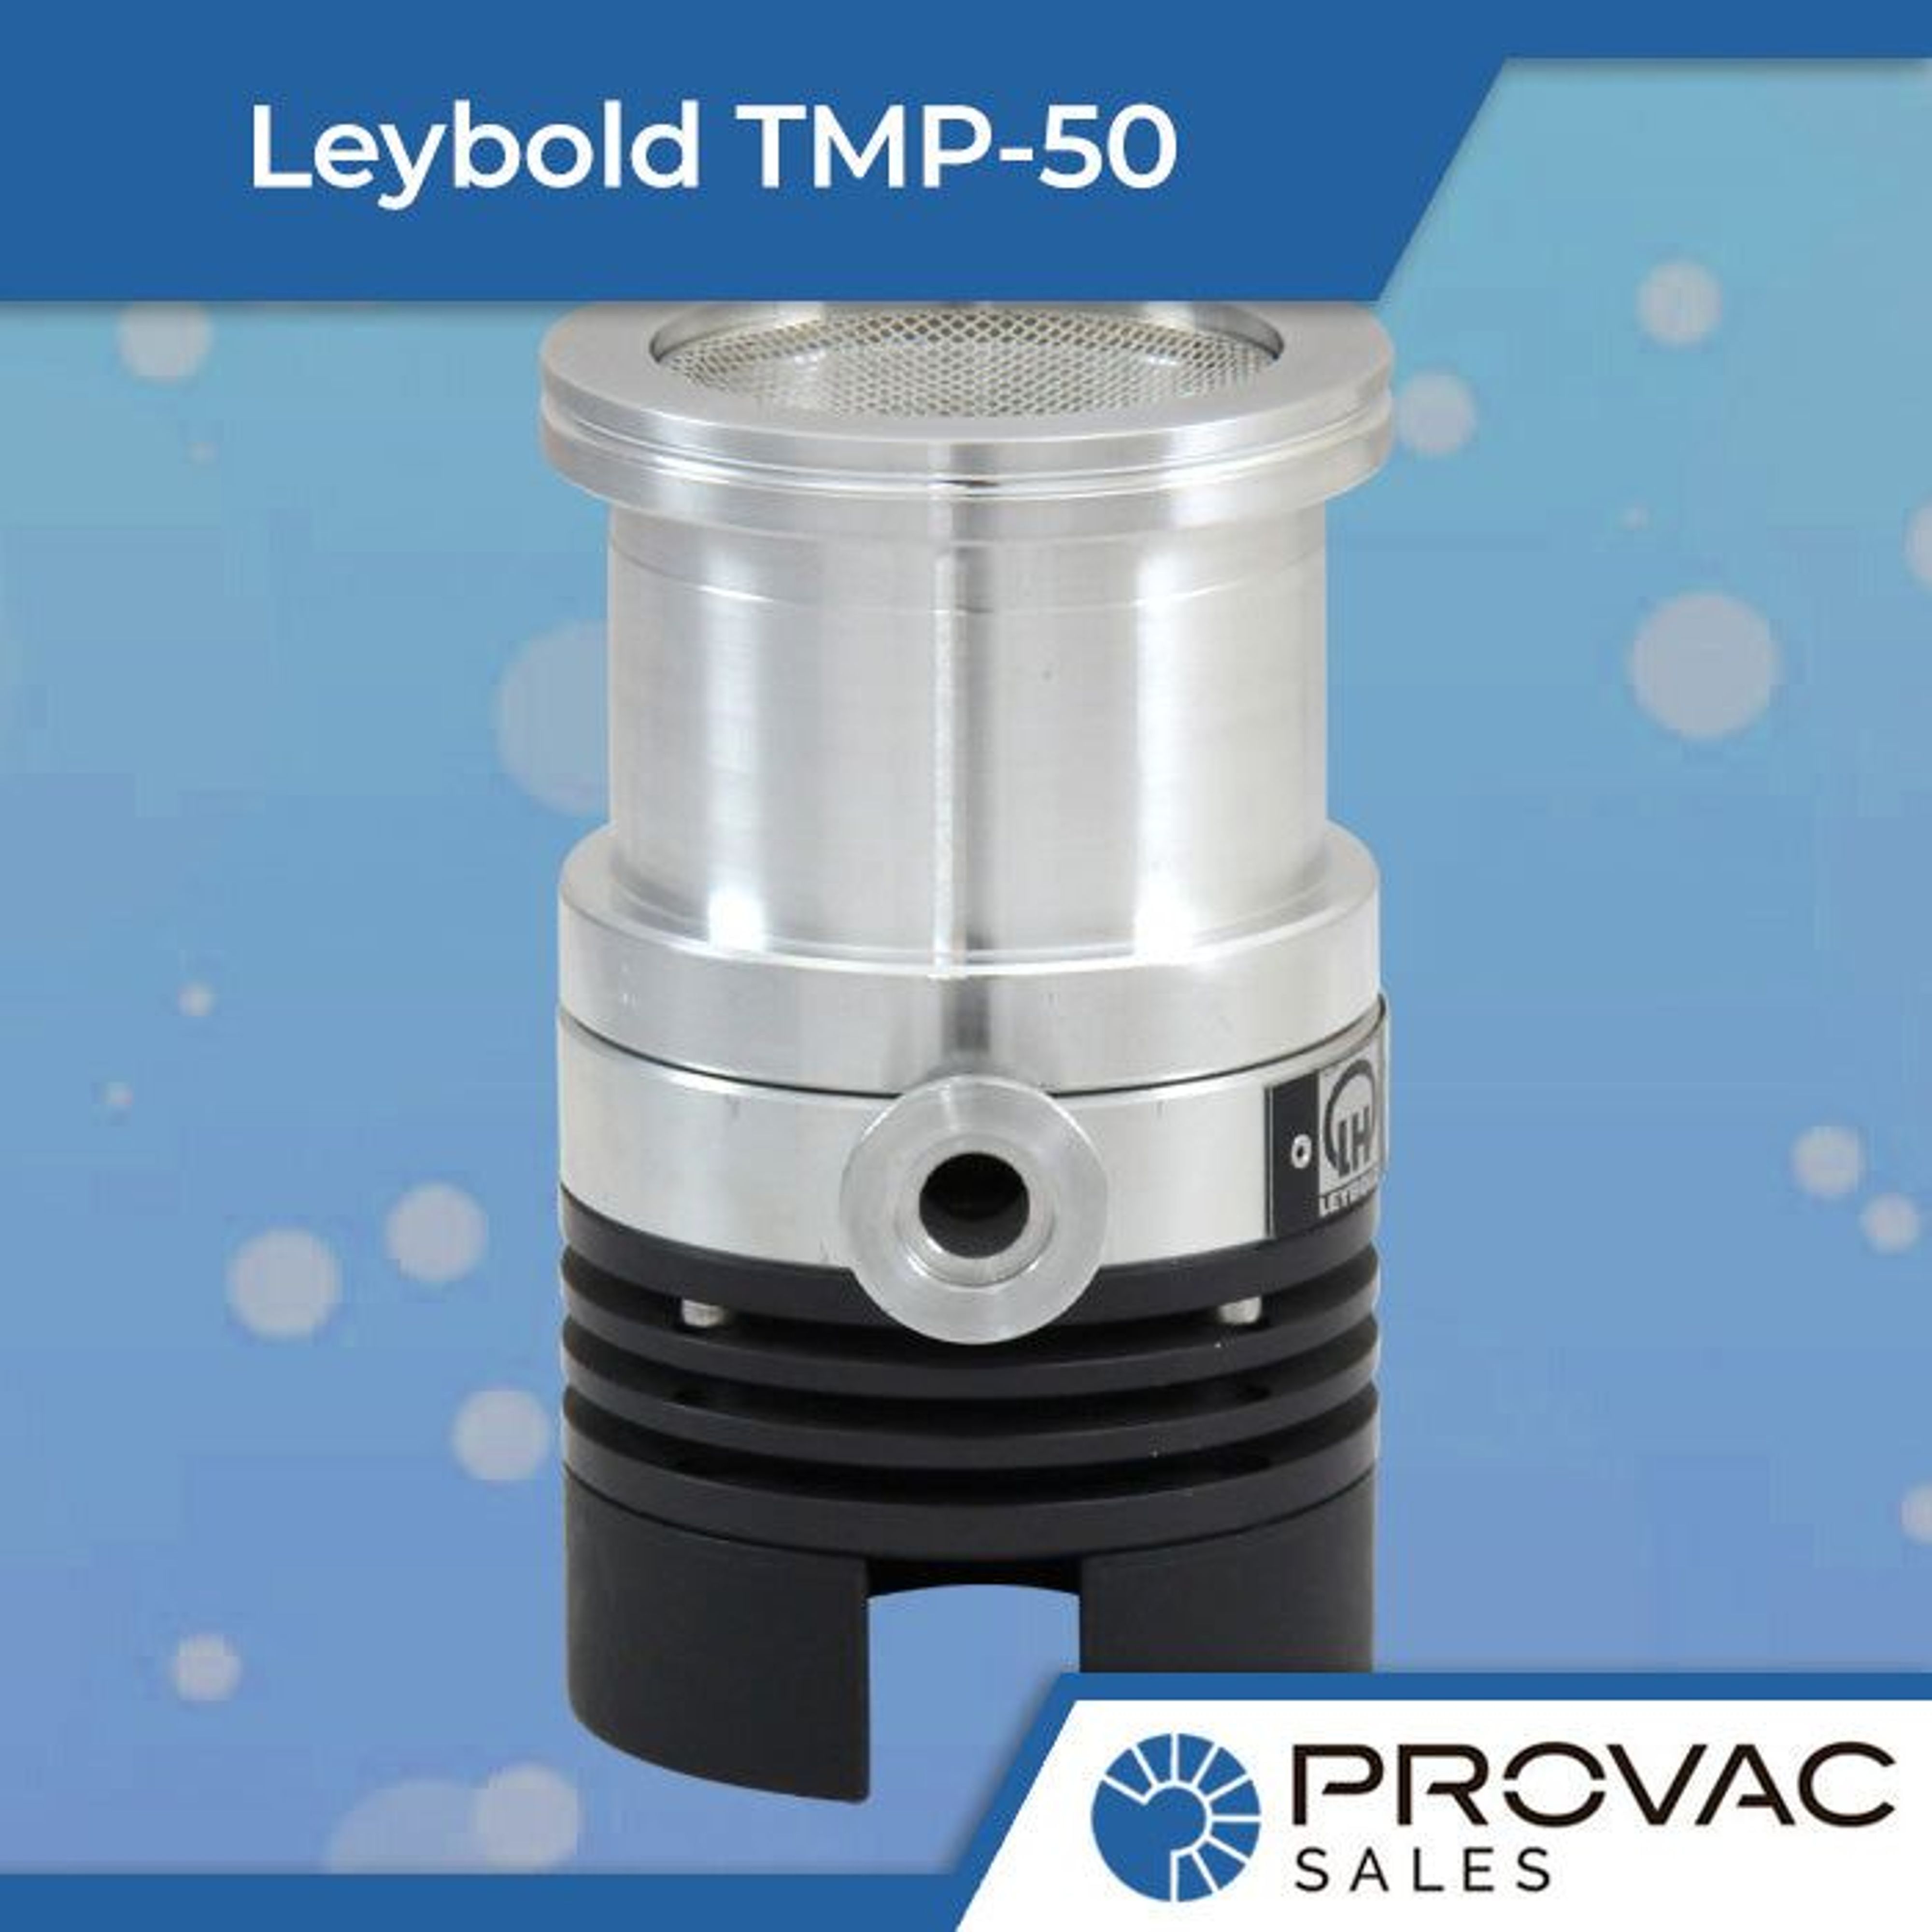 Leybold TMP-50 Turbomolecular Pump Background